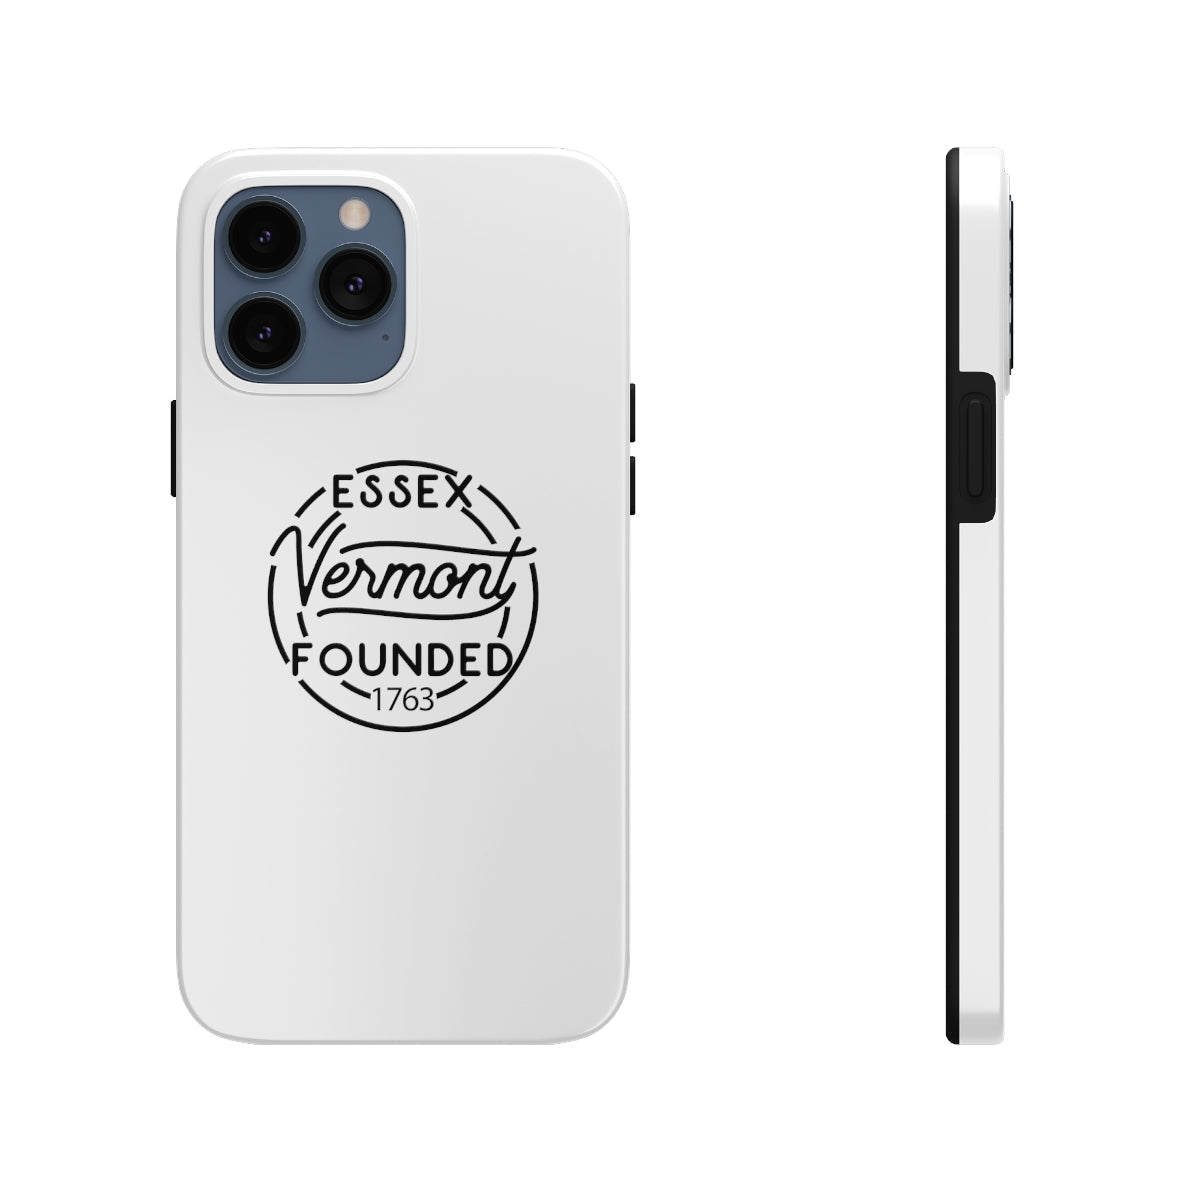 White iphone 13 pro max case for Essex, Vermont